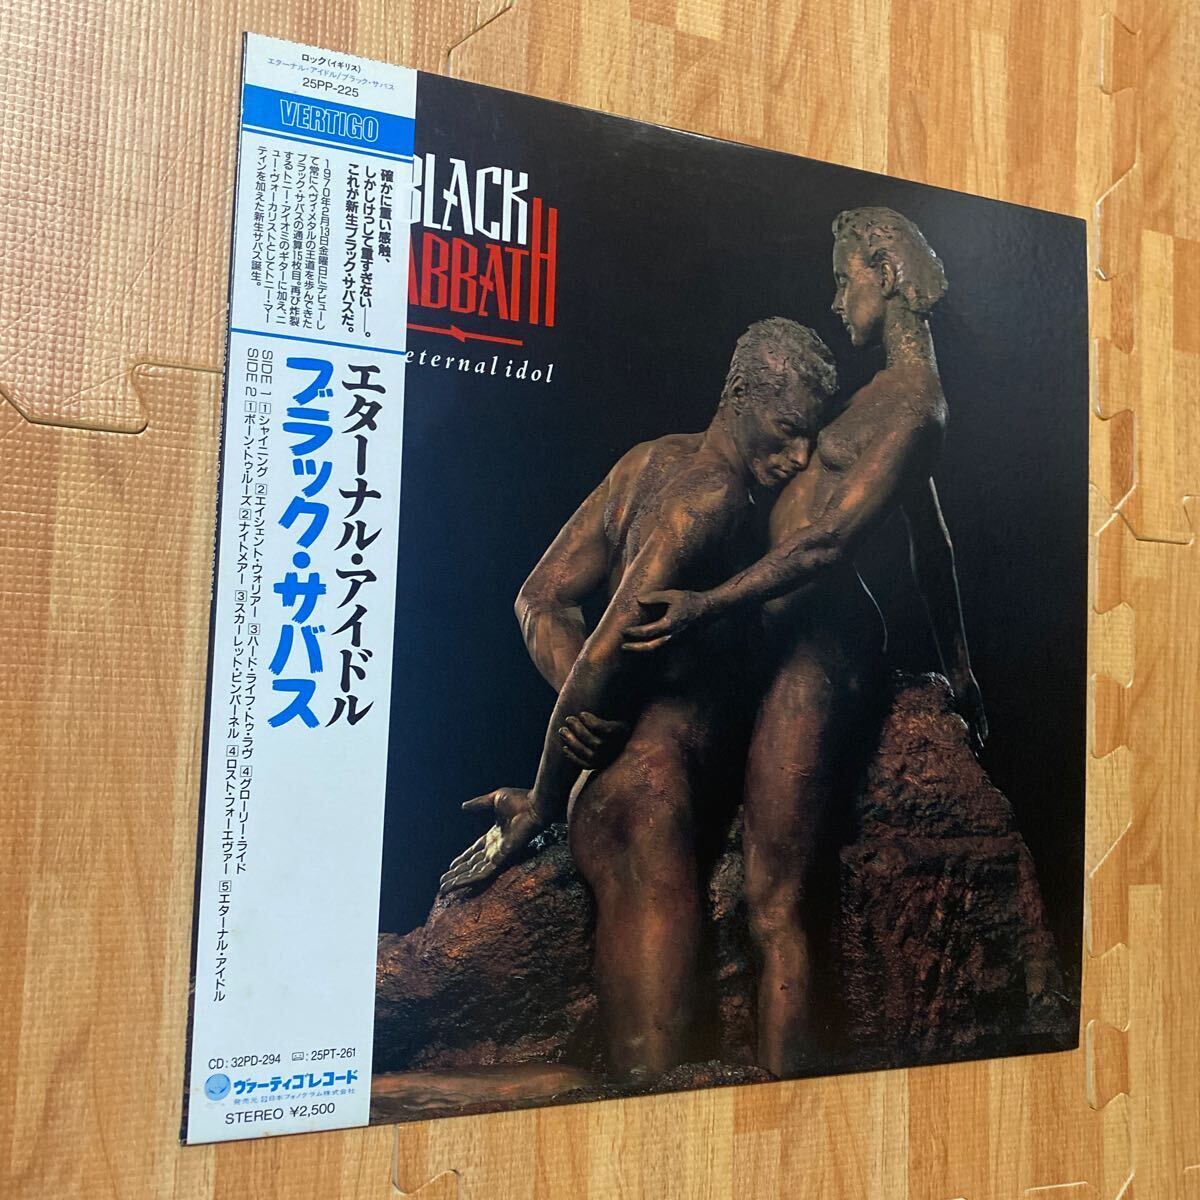 Black Sabbath The Eternal Idol ブラック・サバス エターナル・アイドル 25PP-225 レコード LP 帯付き OBI_画像2